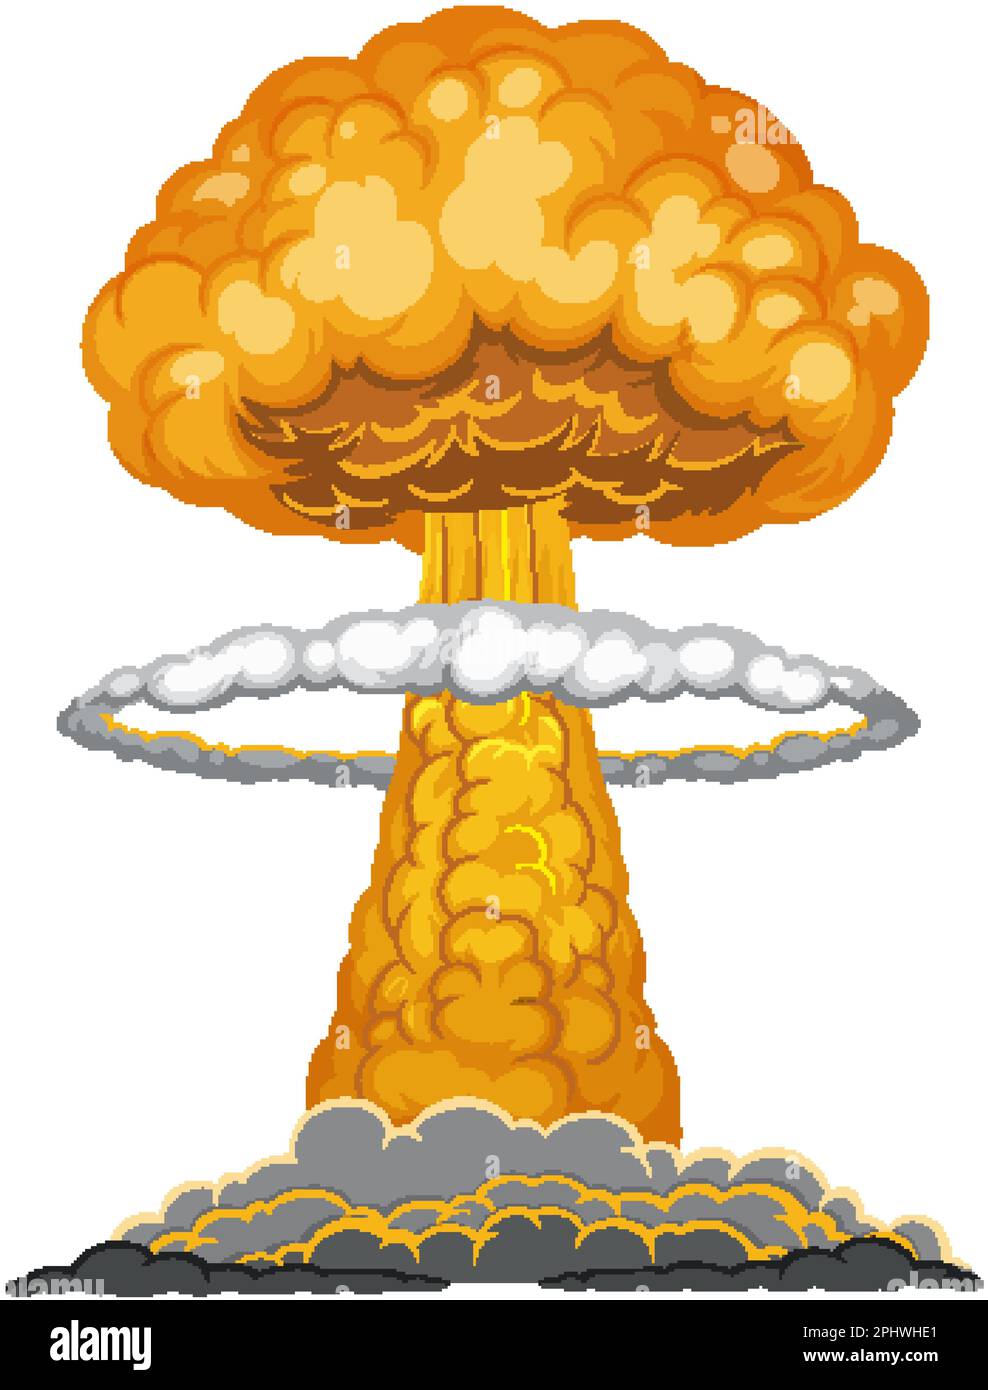 Atomic bomb mushroom cloud illustration Stock Vector